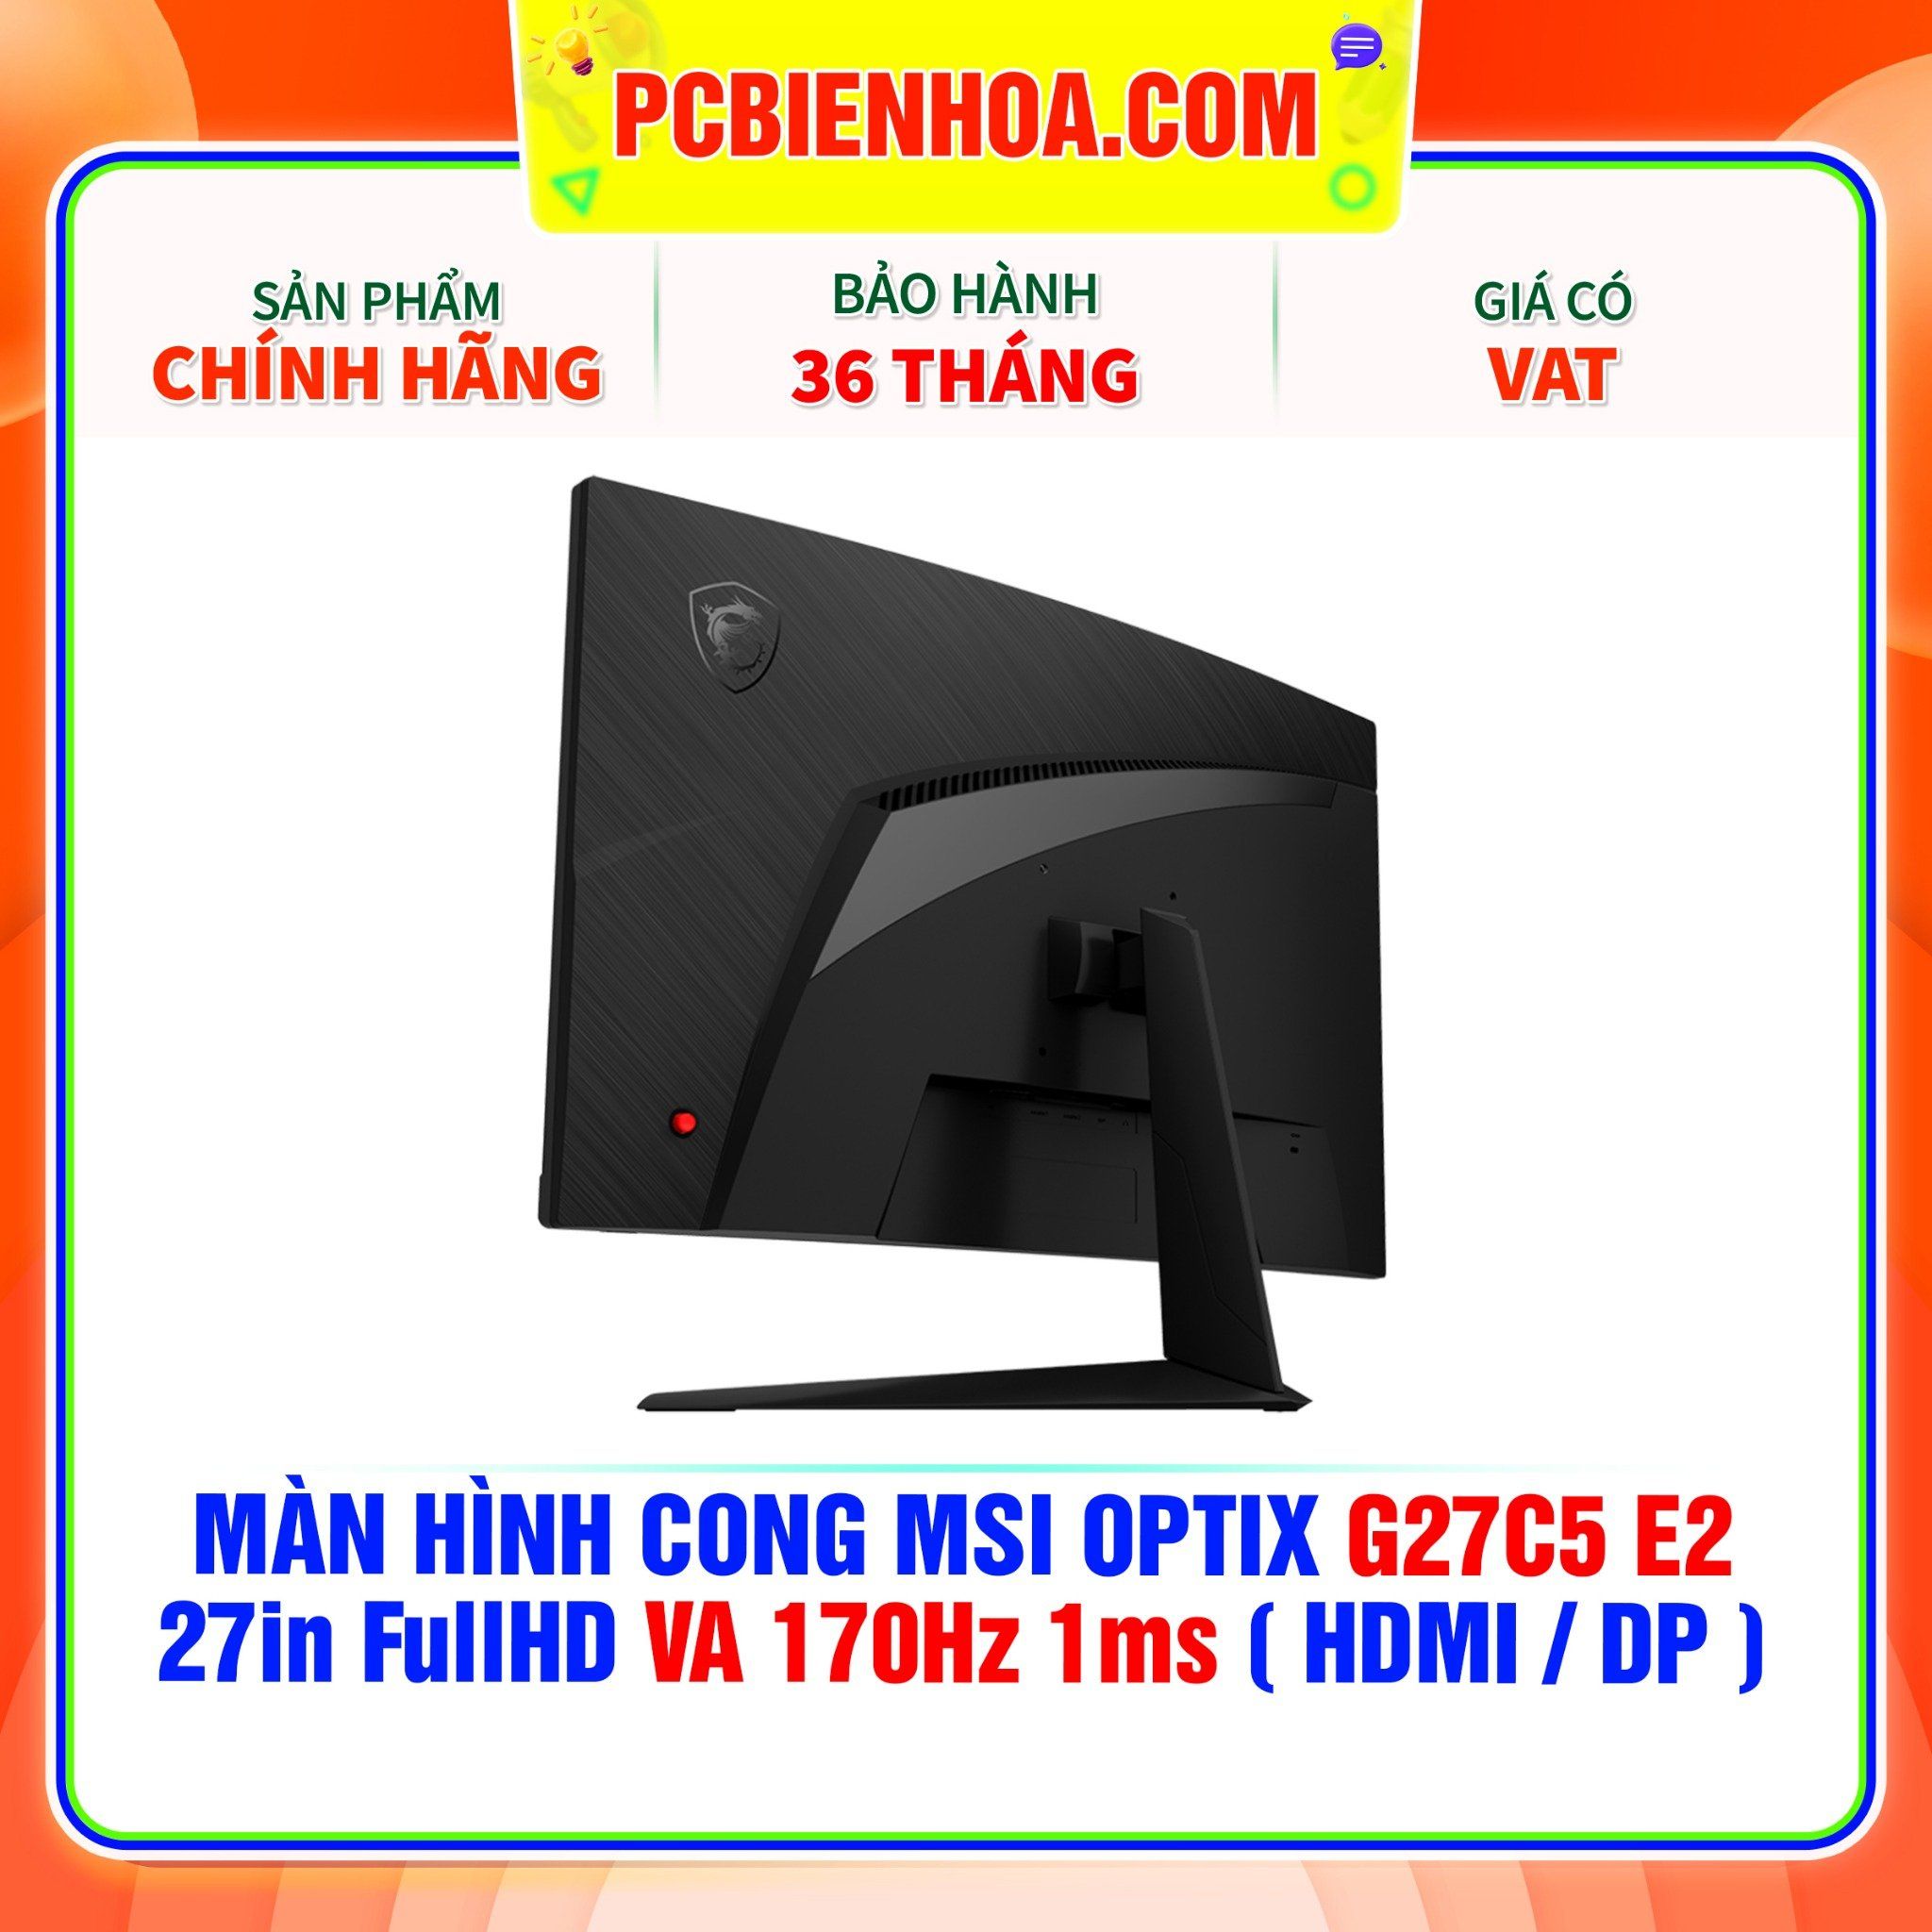  MÀN HÌNH CONG MSI OPTIX G27C5 E2 27in FullHD VA 170Hz 1ms ( HDMI / DP ) 